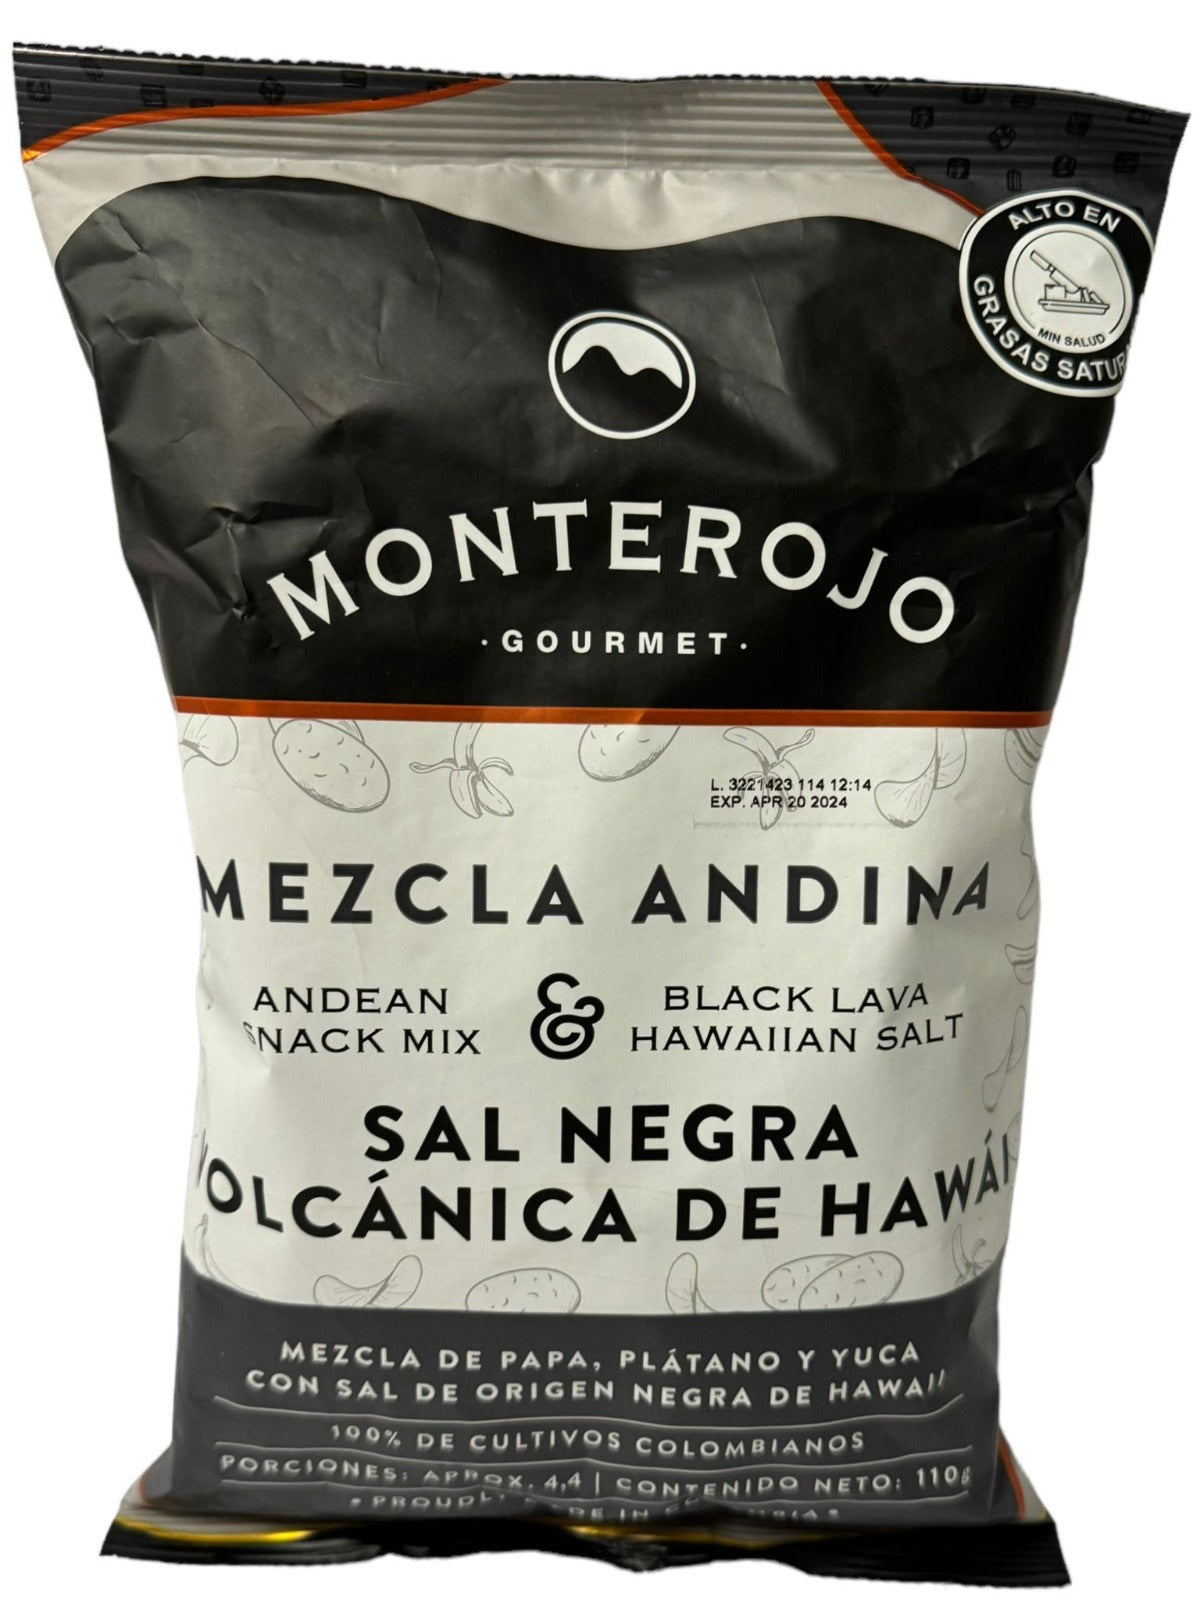 Monterojo Mezcla Andina Sal Negra Volcanica de Hawai Black Lava Hawaiian Salt Snack Mix 110g